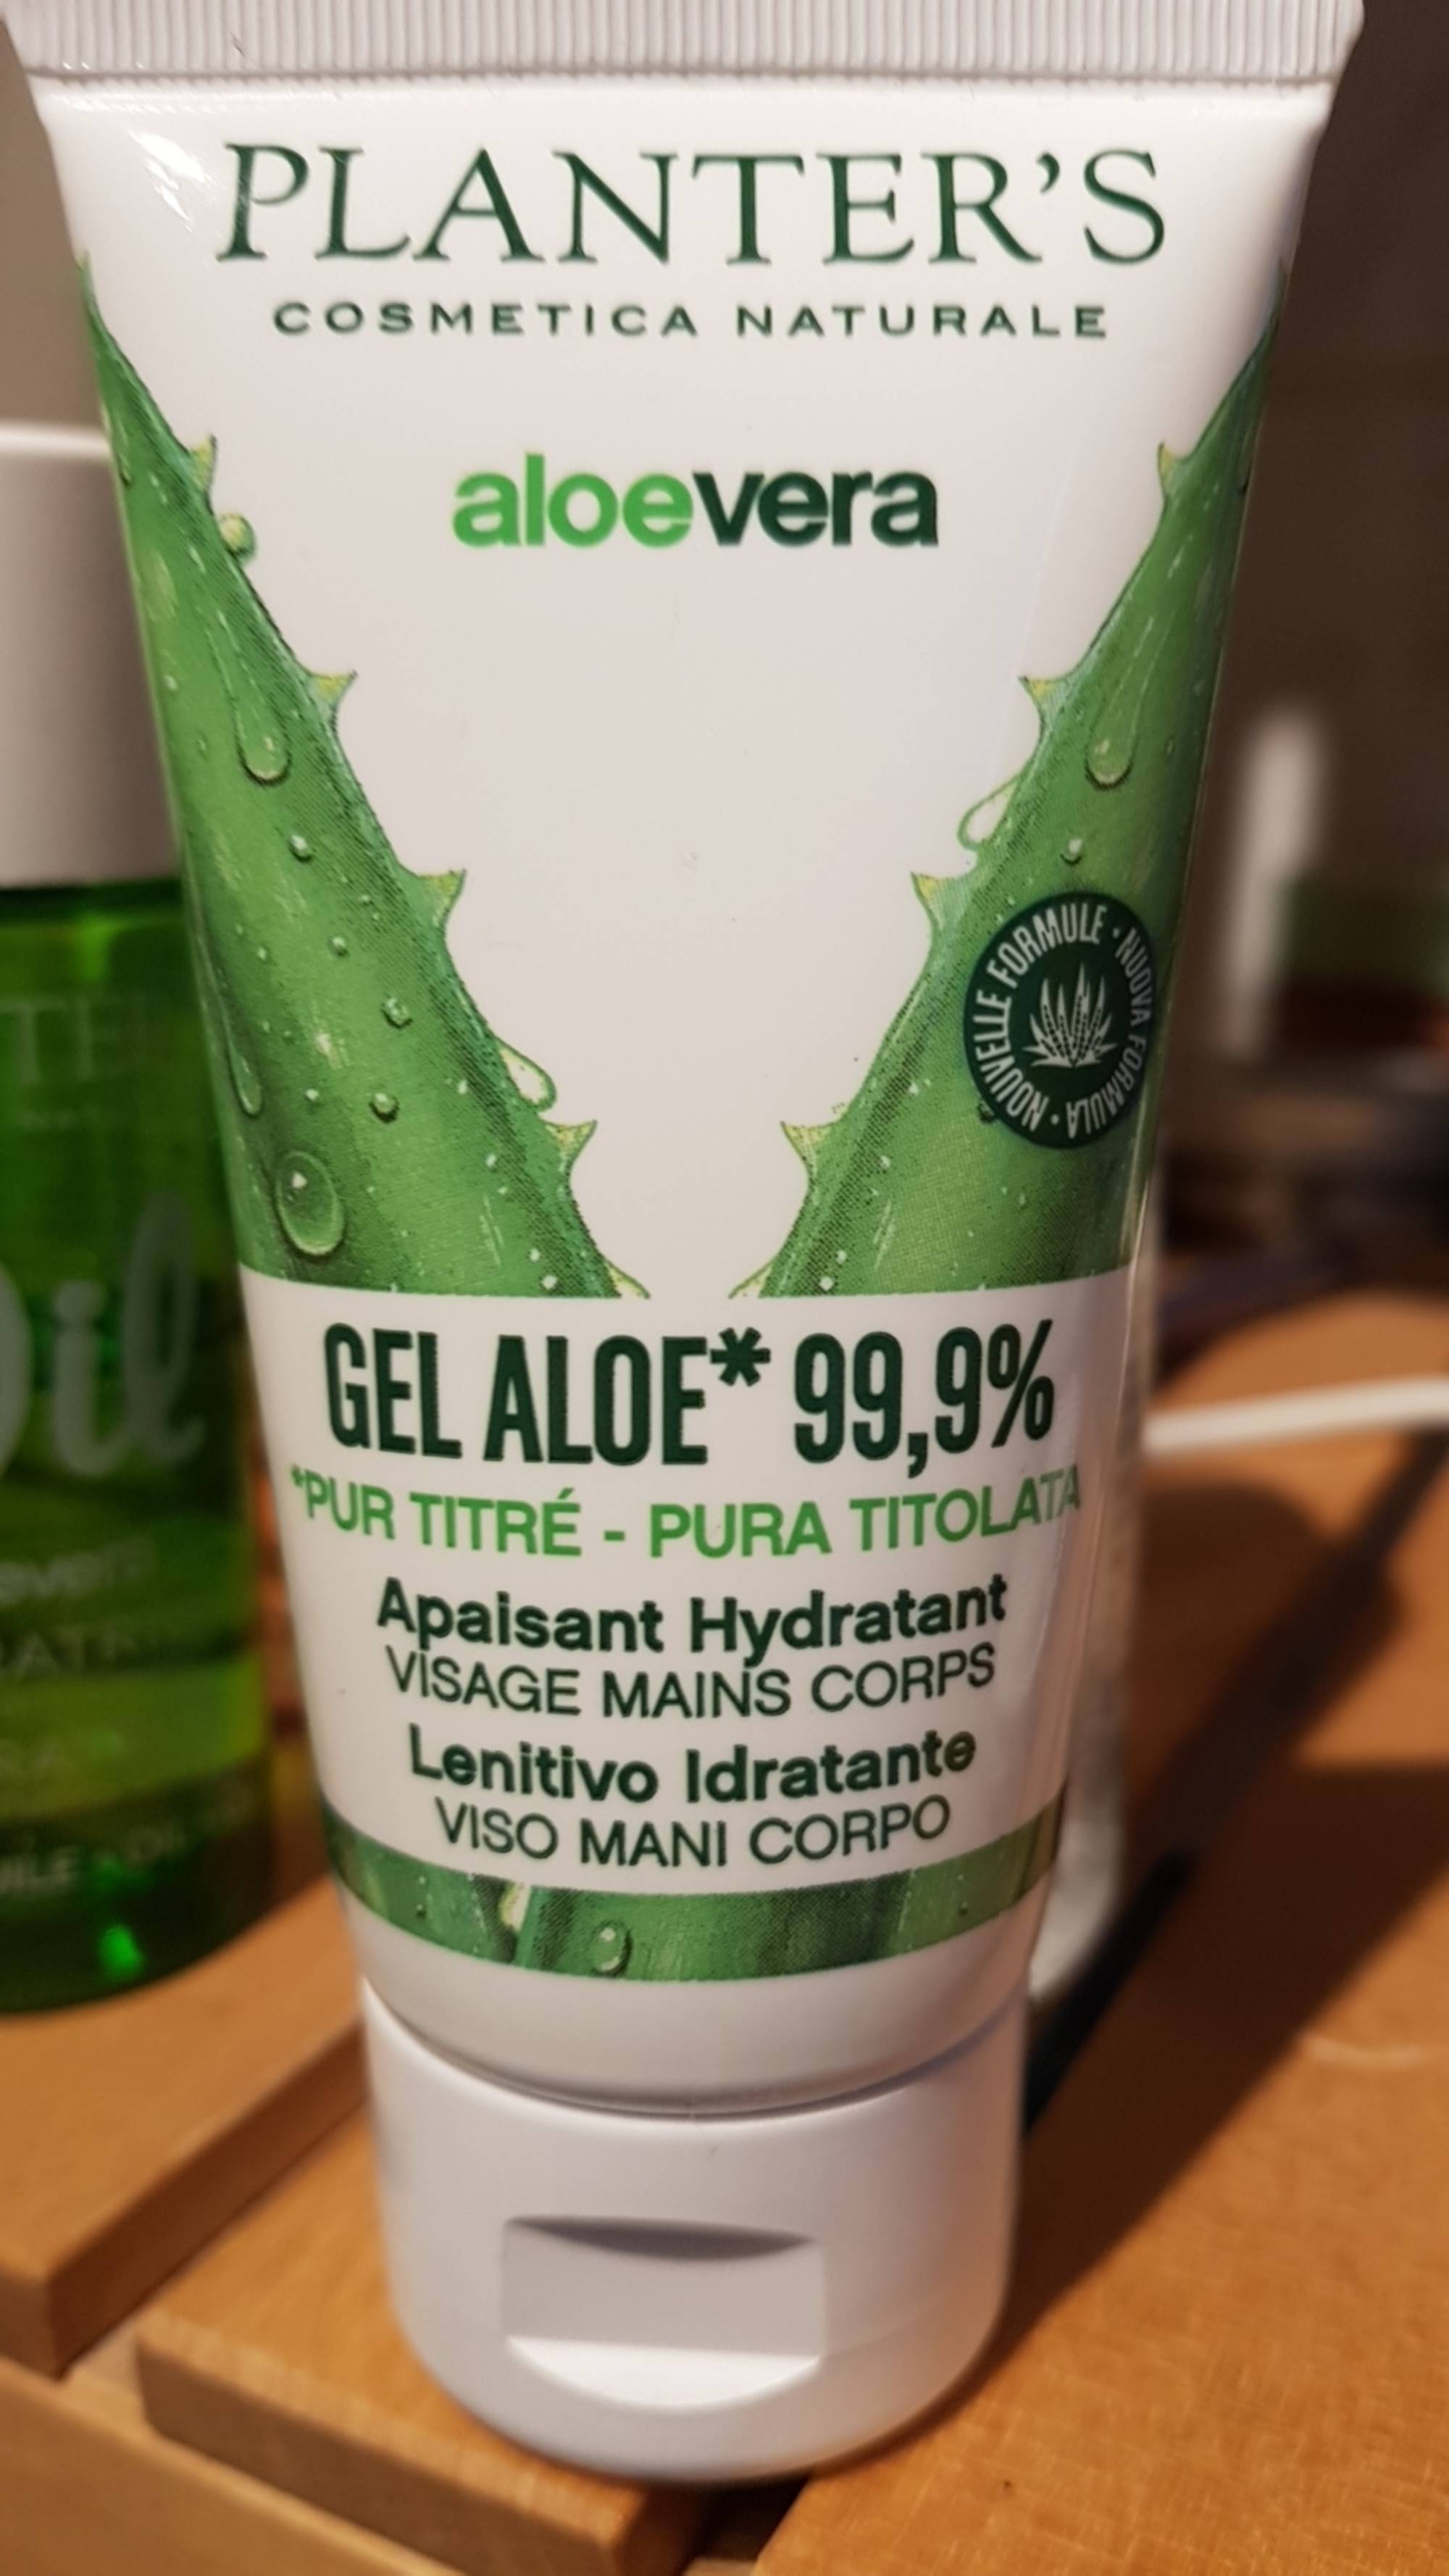 PLANTER'S - Aloevera - Gel aloe 99,9% apaisant hydratant